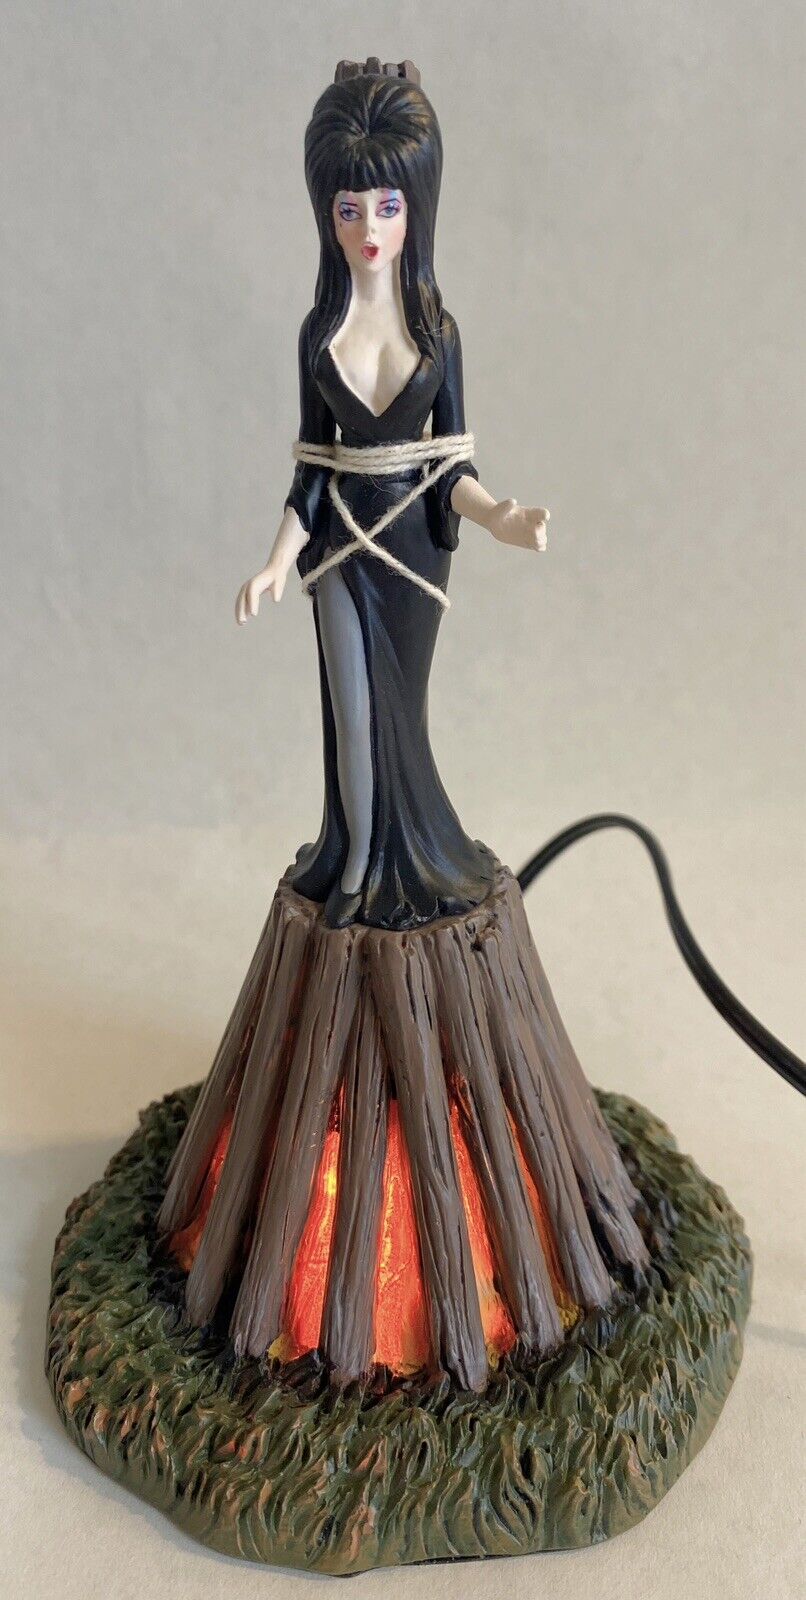 Dept 56 Elvira Mistress Of The Dark “Elvira At The Stake” Figurine 6013670